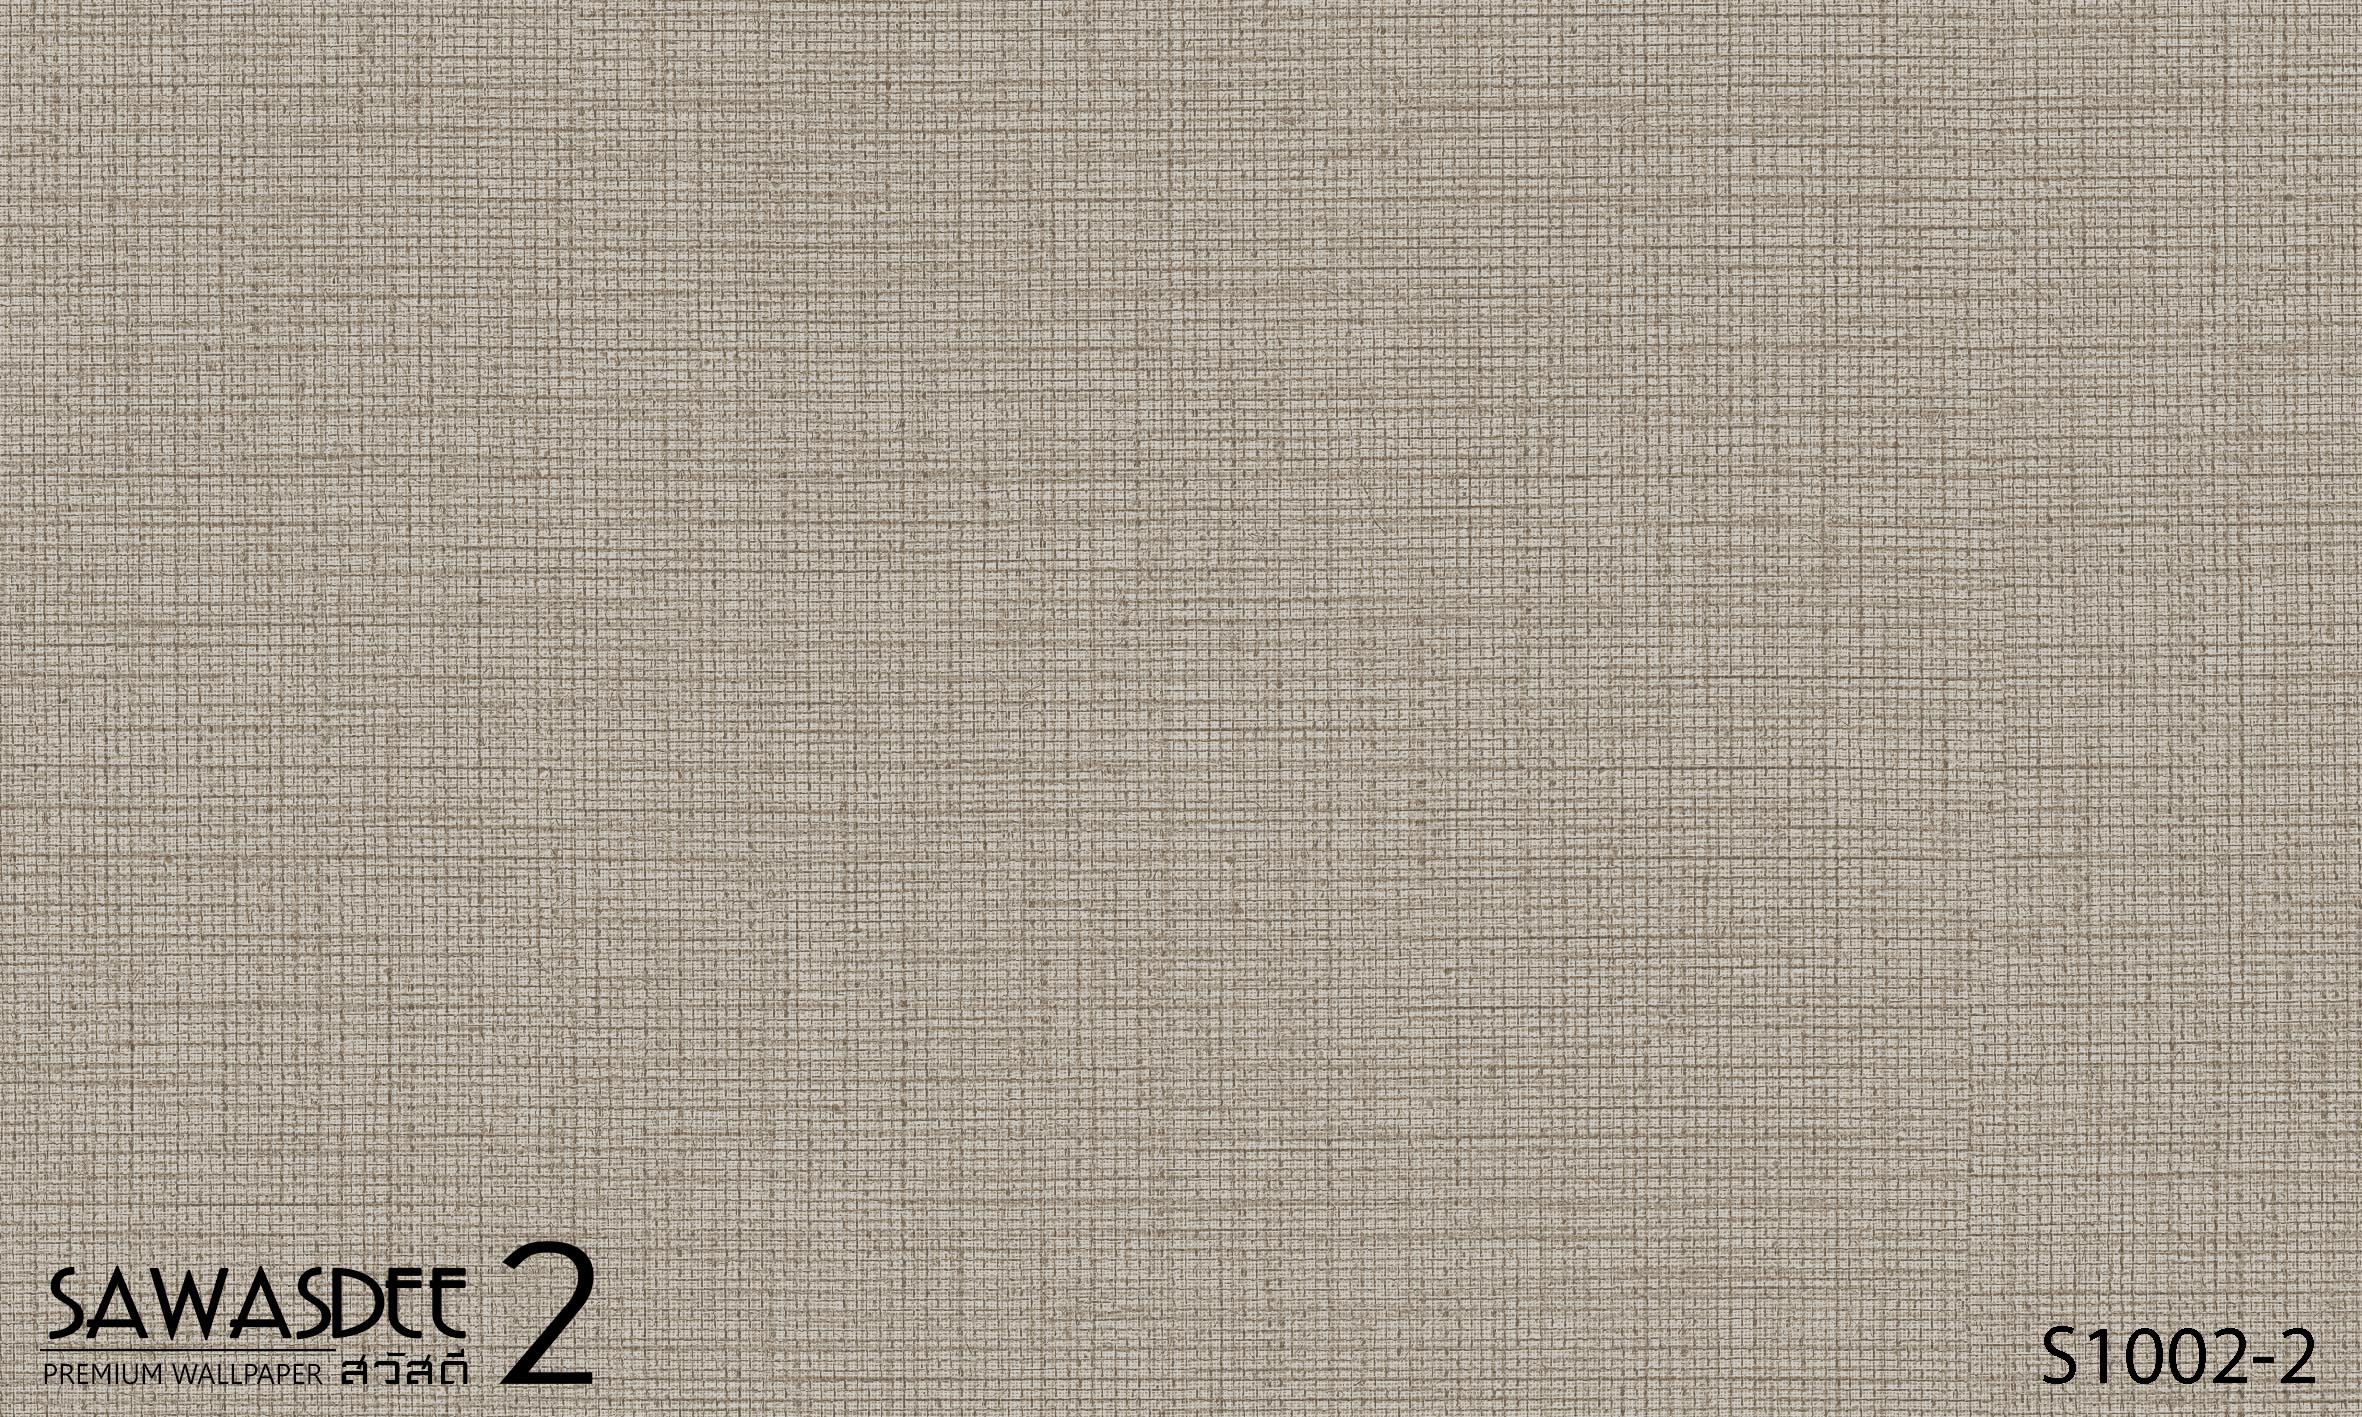 Wallpaper (SAWASDEE 2) S1002-2